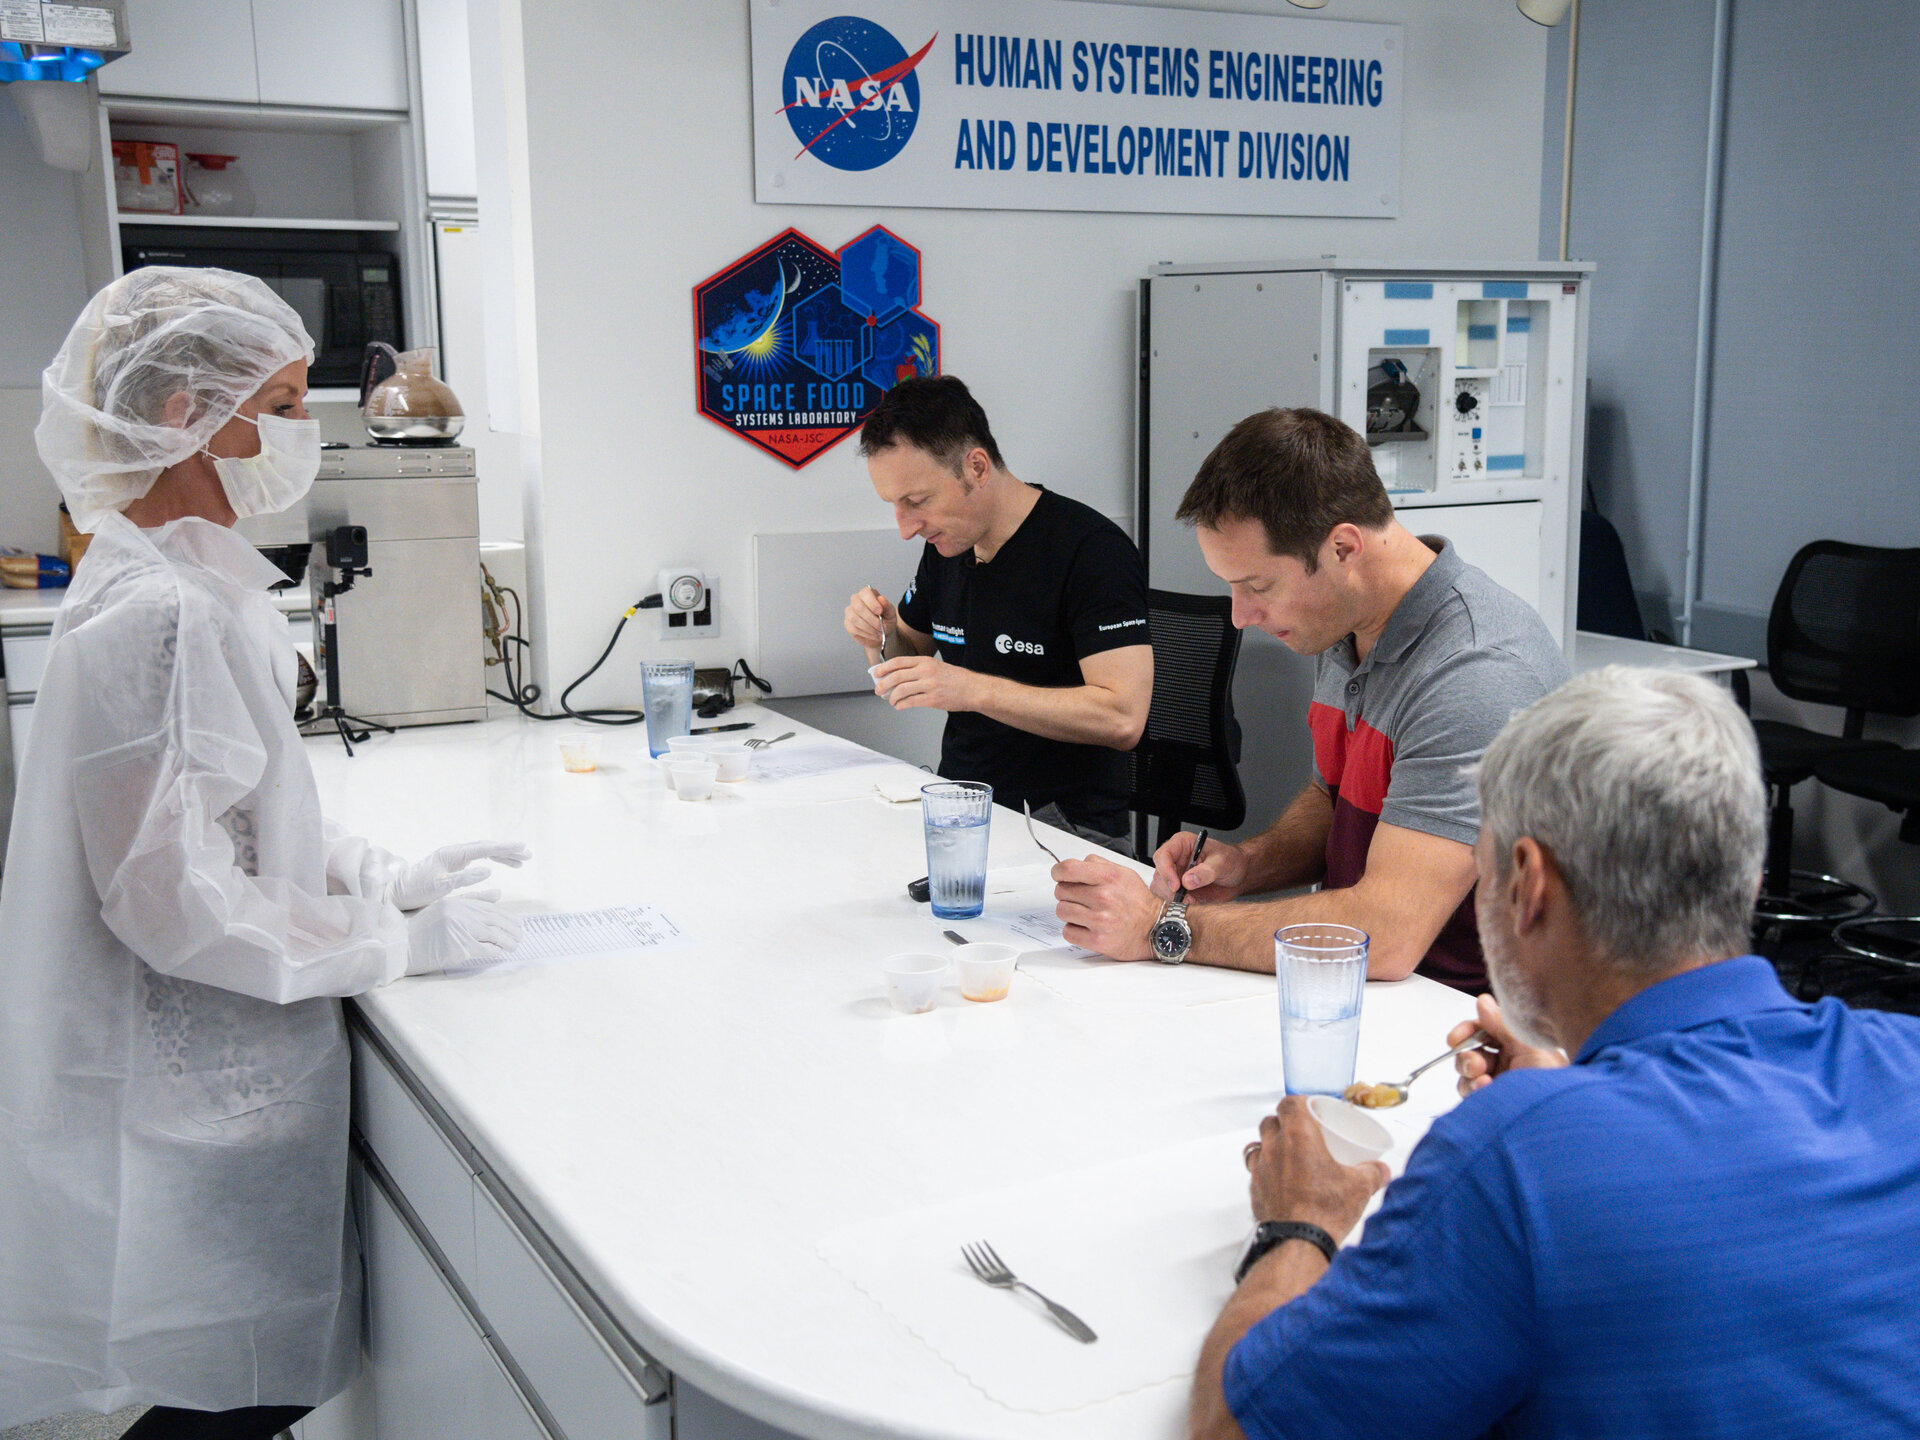 Space food tasting with ESA astronauts Matthias Maurer and Thomas Pesquet at NASA